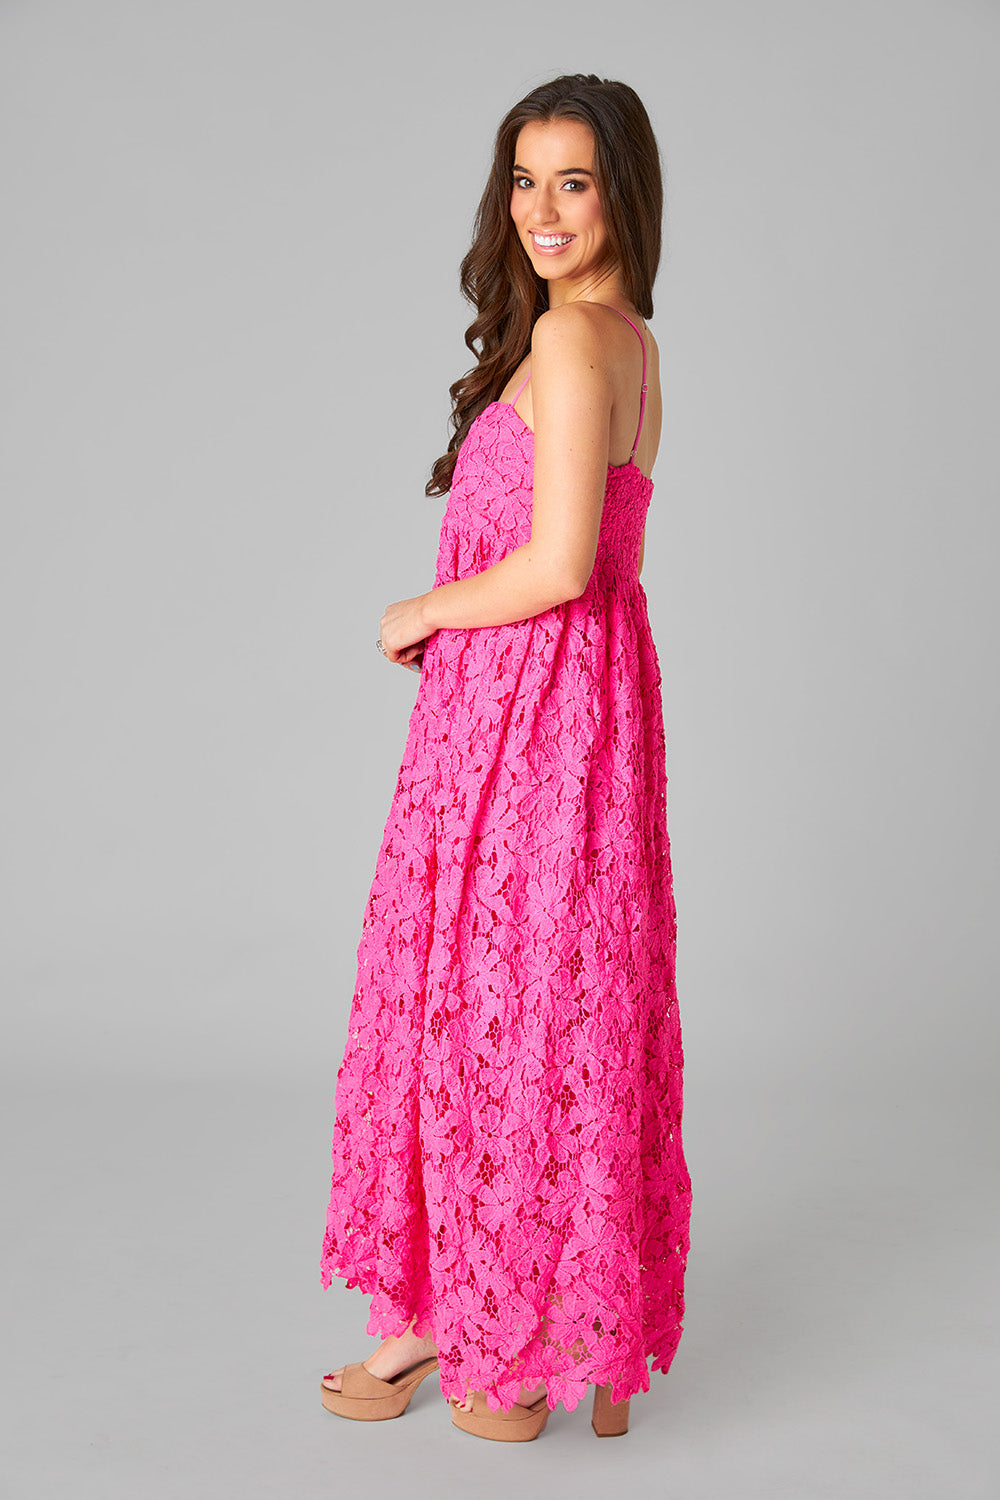 BuddyLove Sissy Lace Mini Dress - Morning Glory - L / Pink / Florals